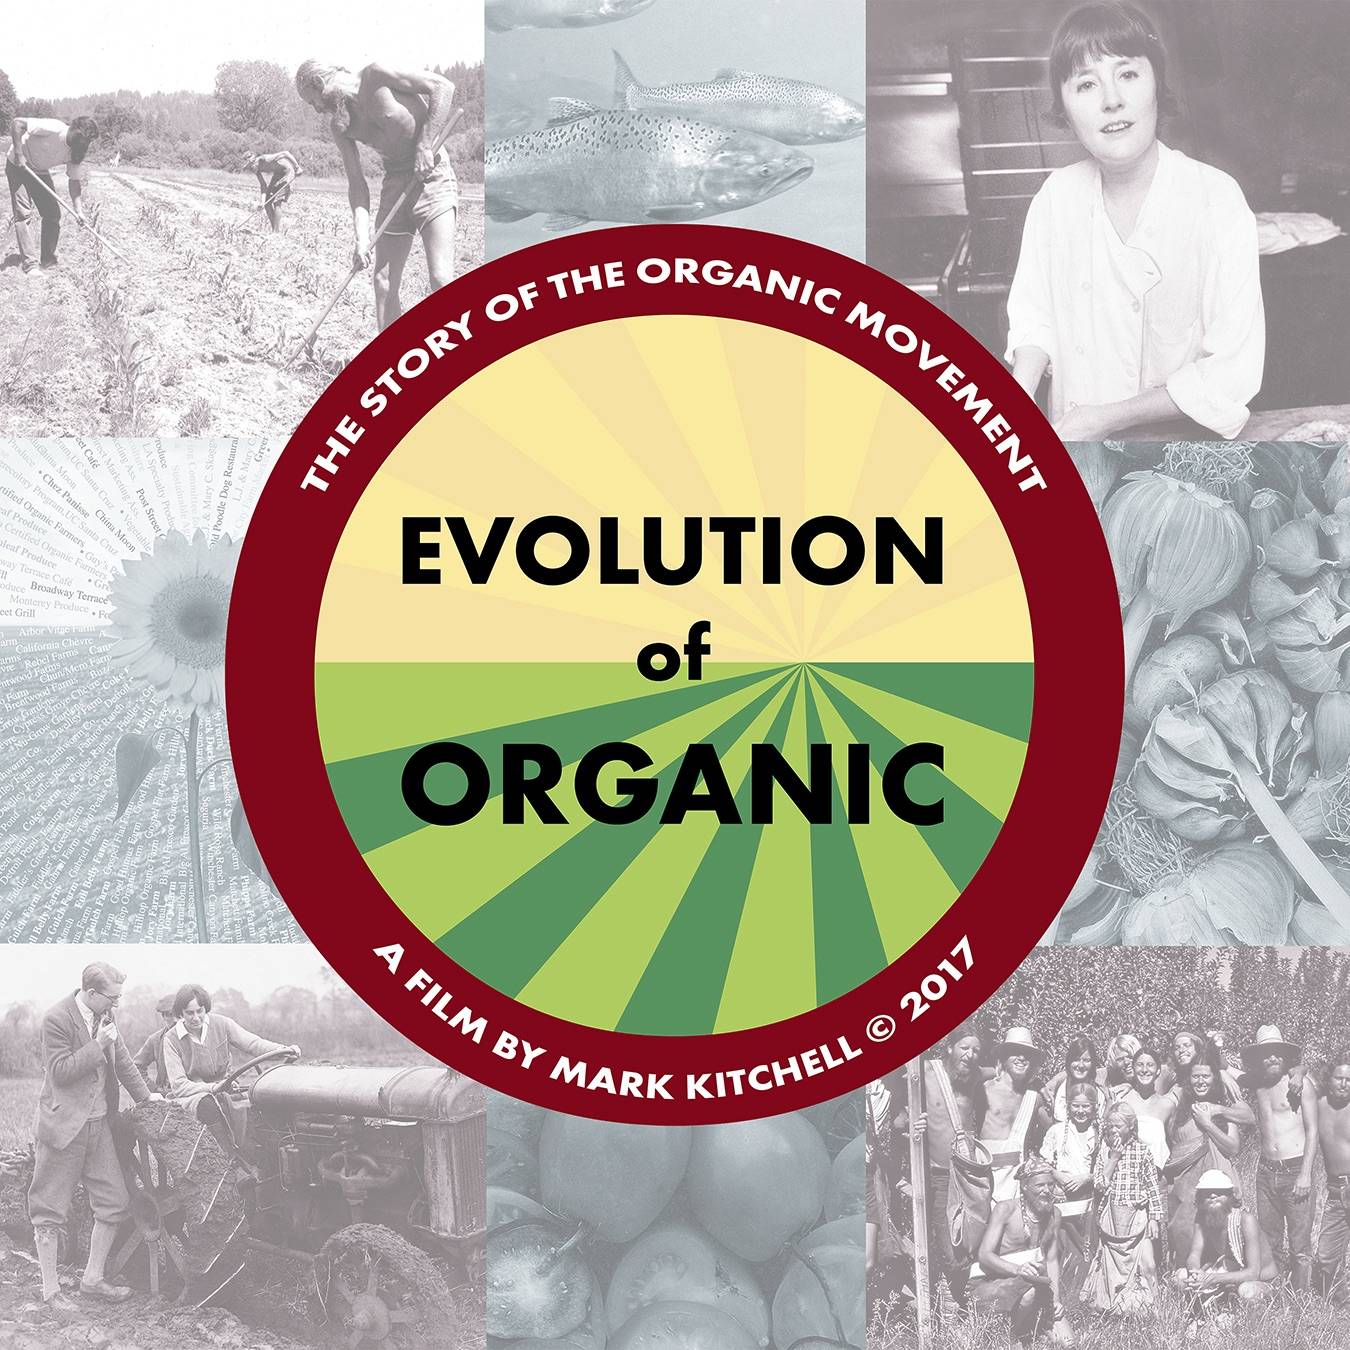 Organic farming gathering: Film and panel